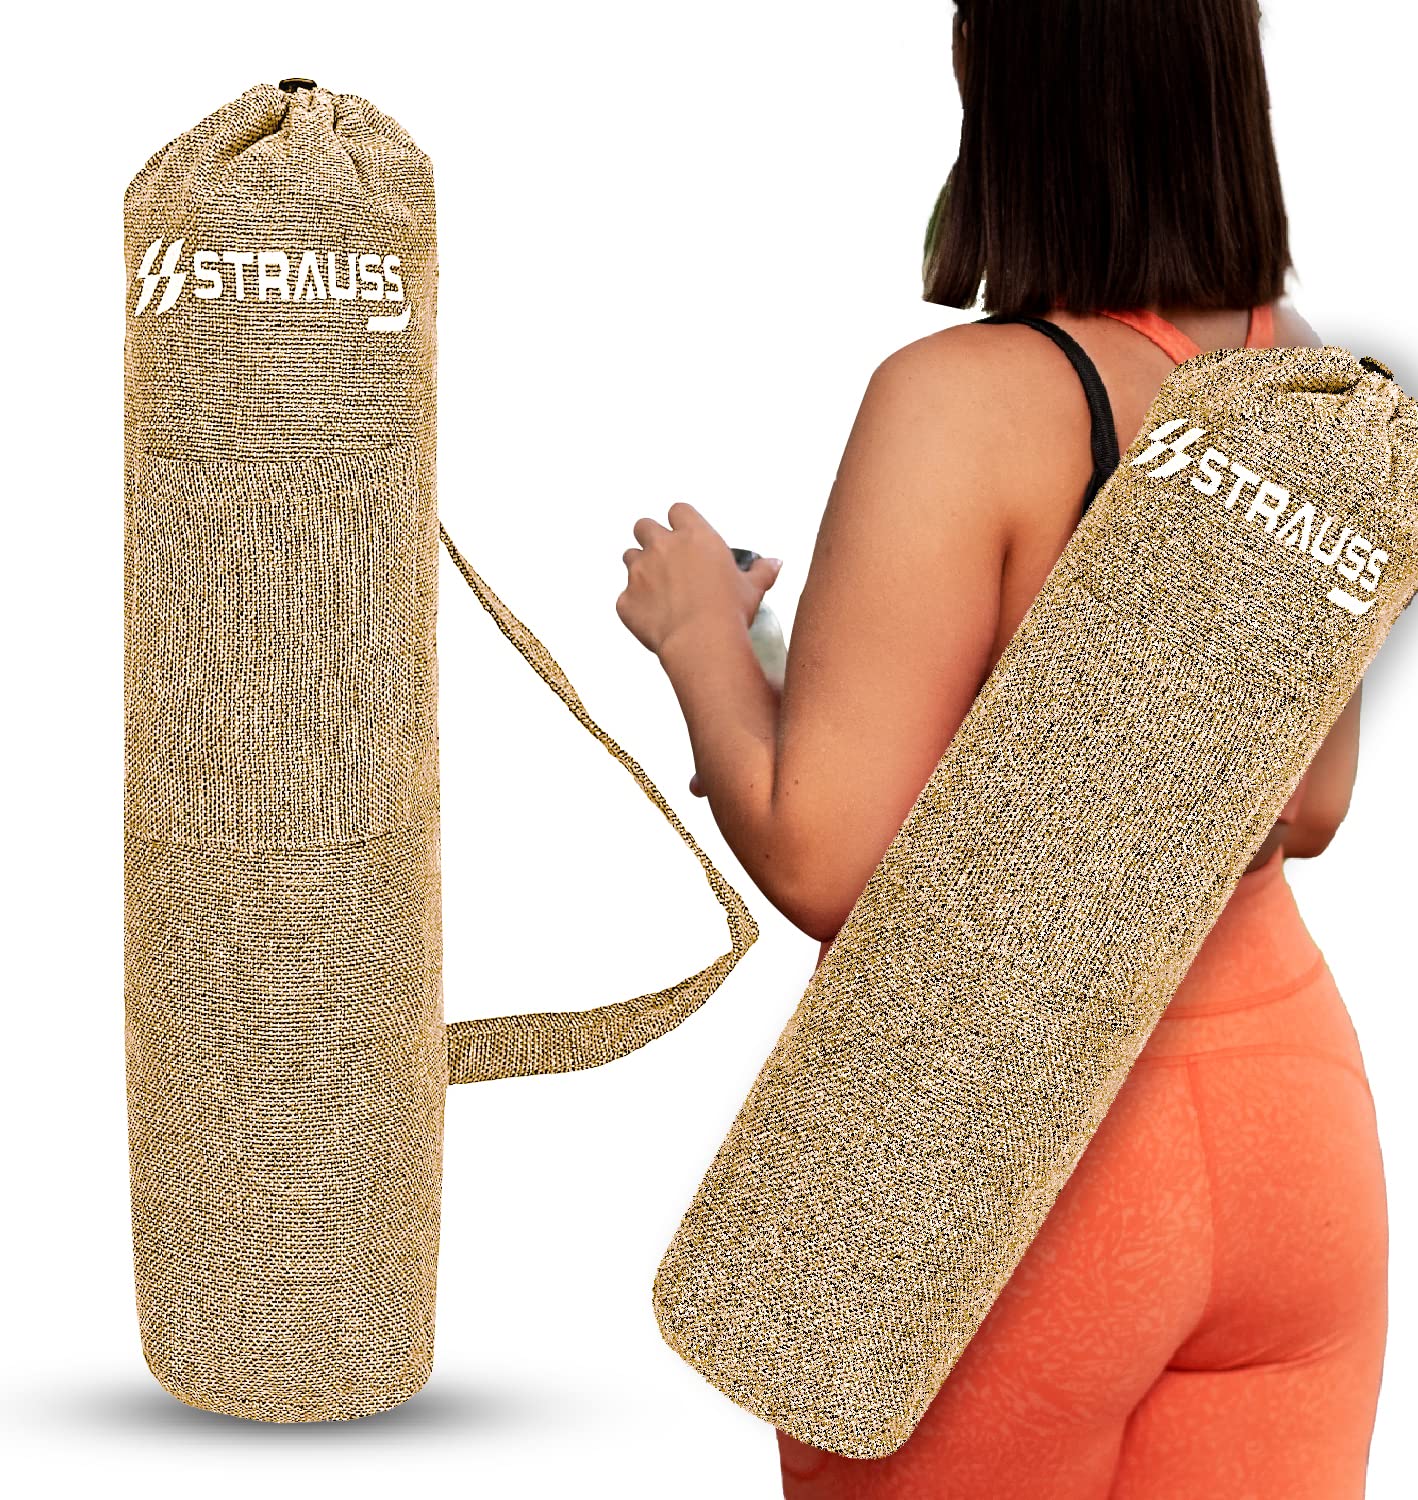 STRAUSS Yoga Mat Bag (Full Zip), Cloud